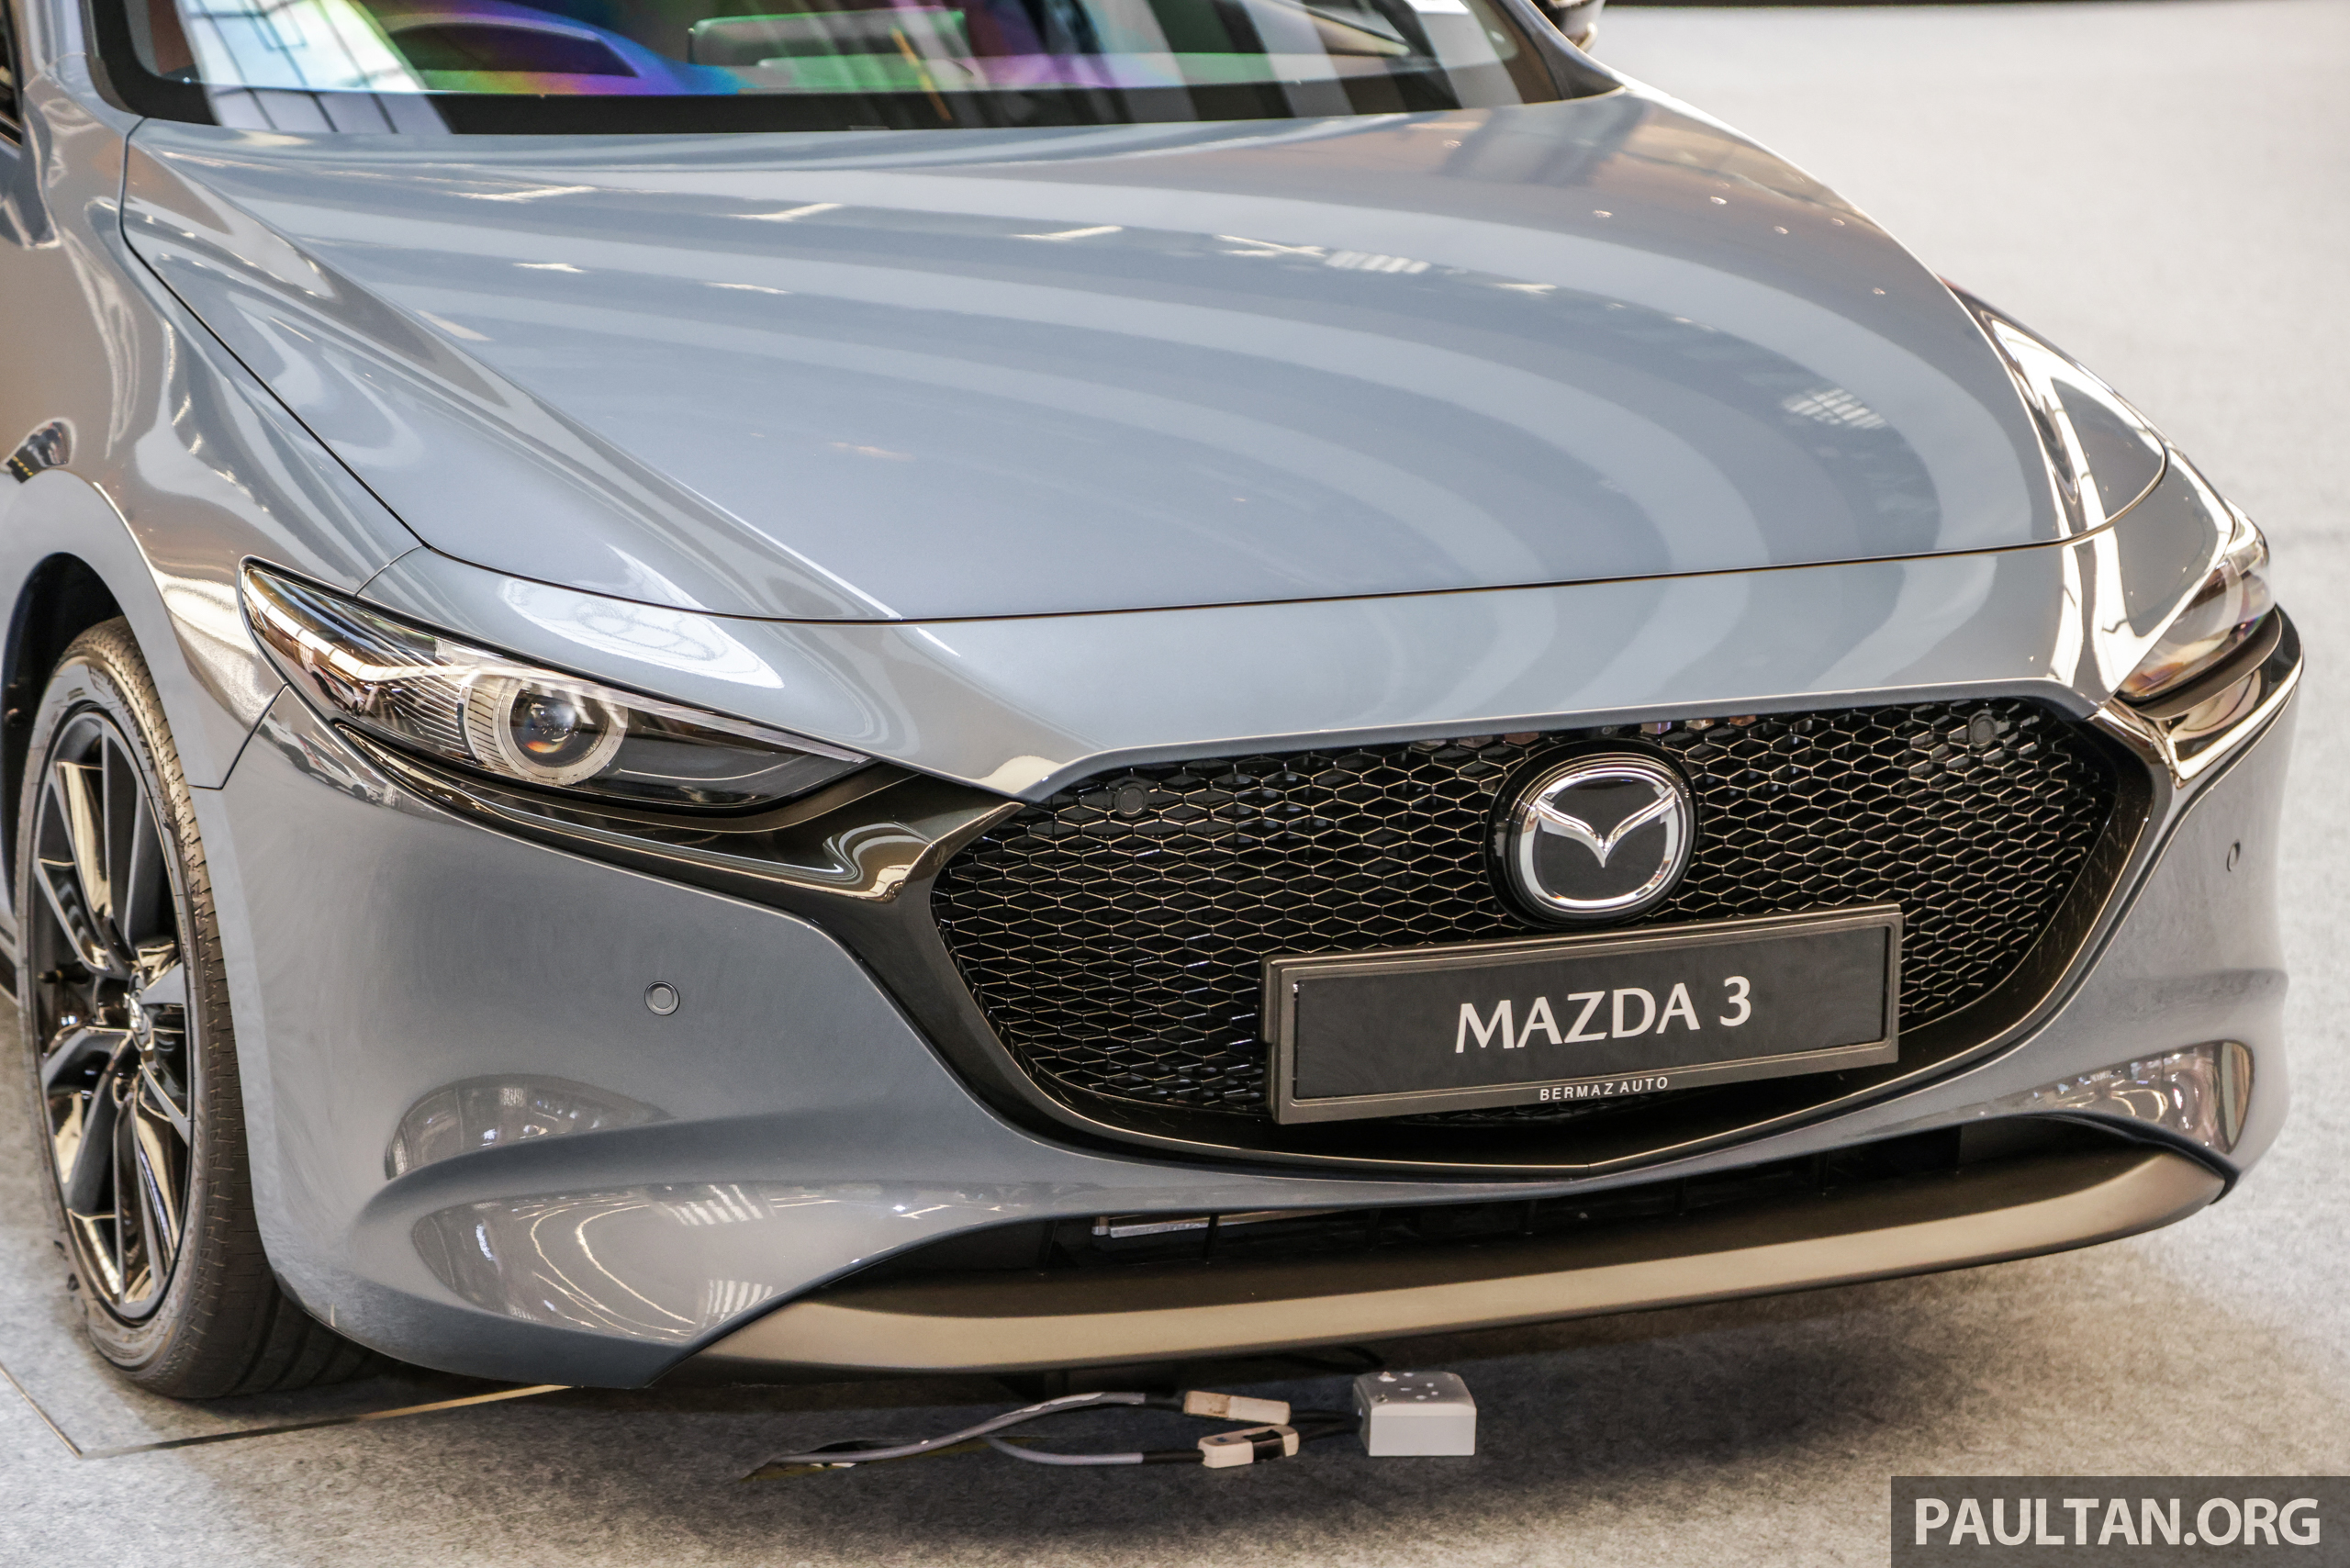 2023_Mazda_3_IPM Ignite Edition_Malaysia_Ext-8 - Paul Tan's Automotive News